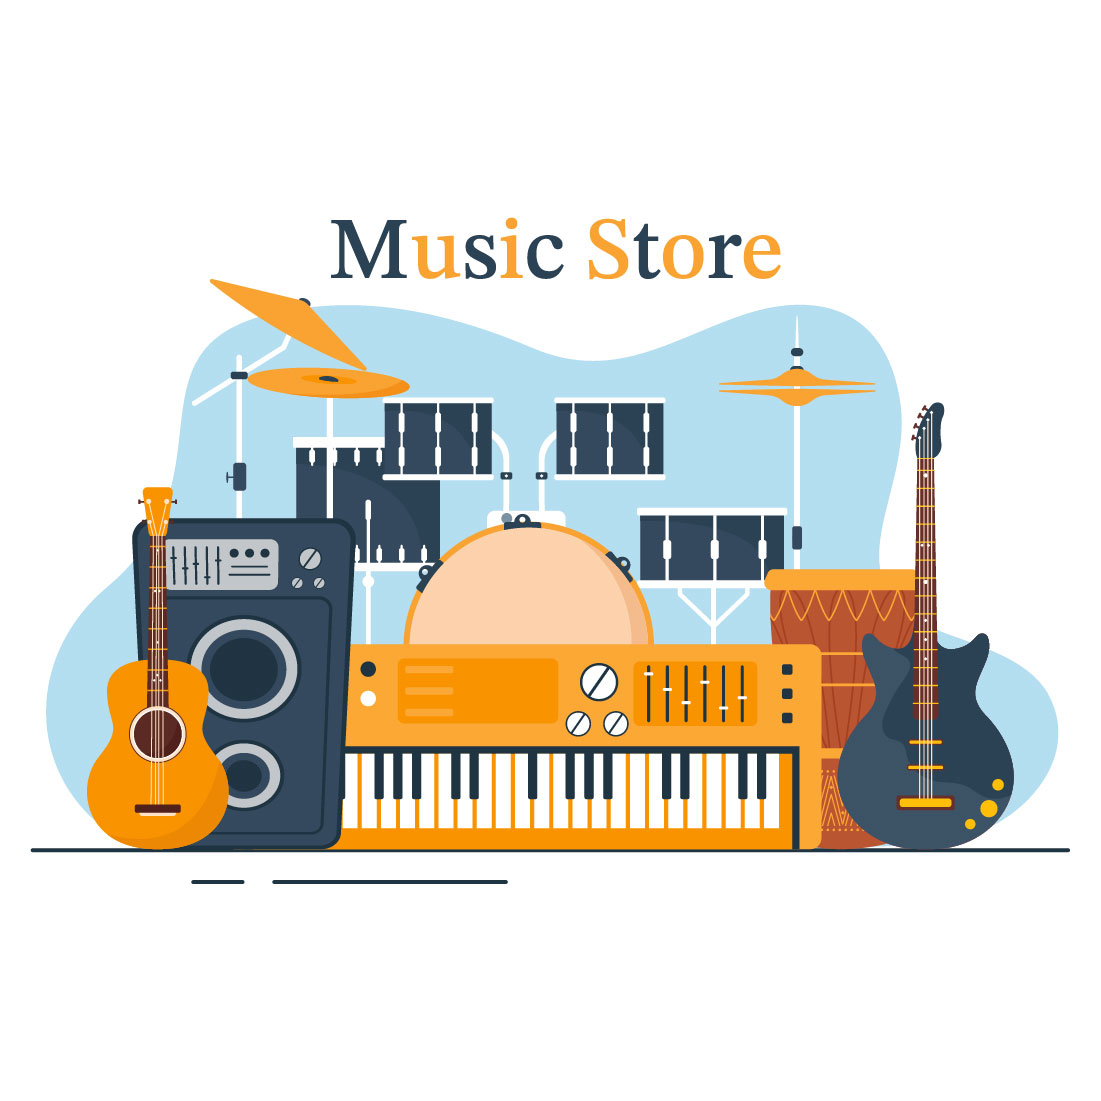 11 Music Shop Illustration - main image preview.